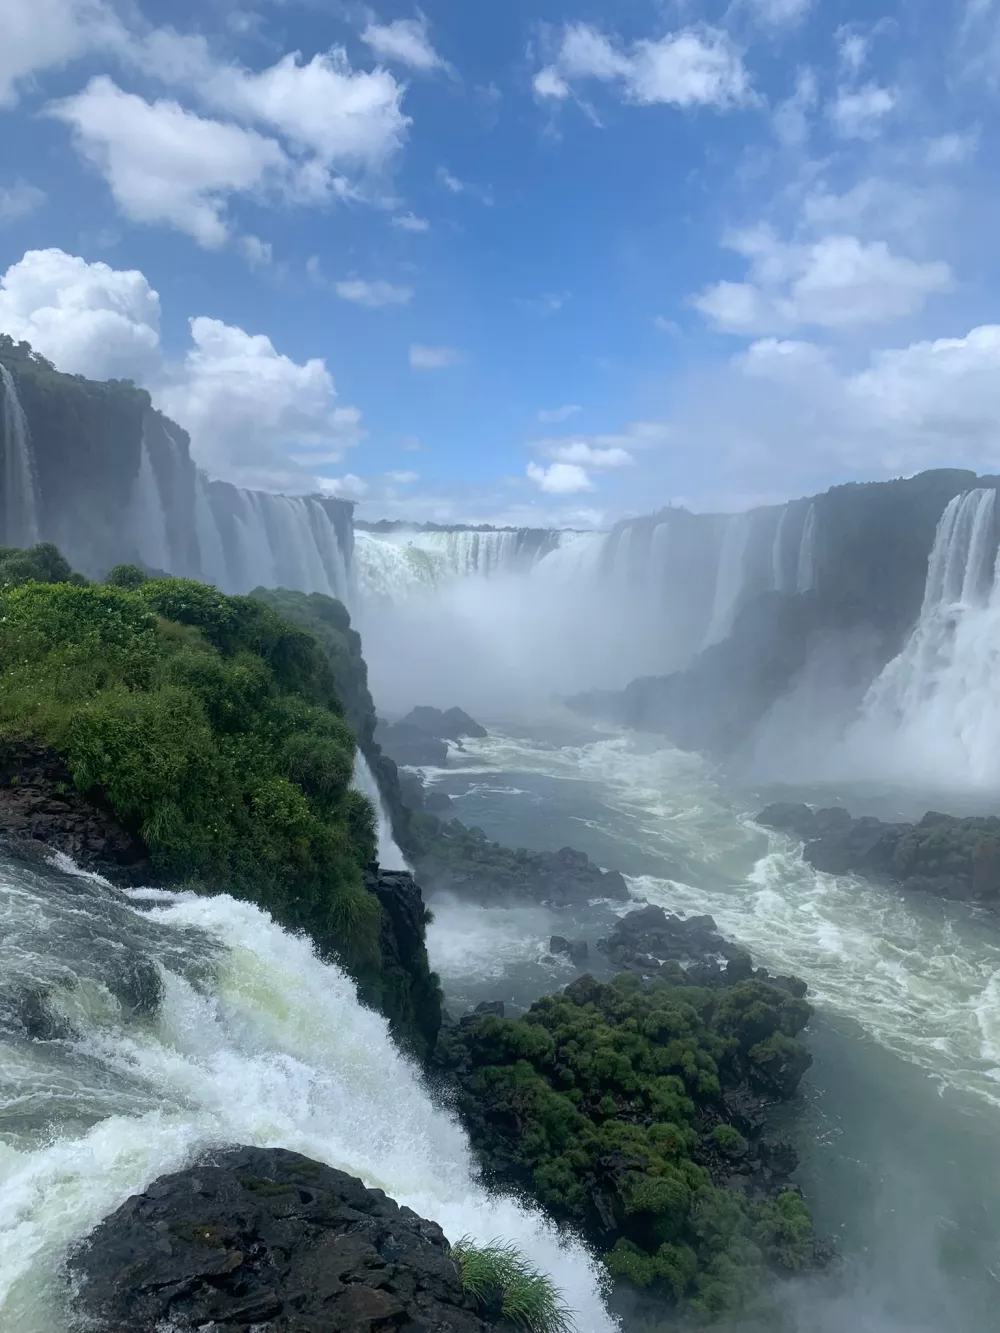 The awesome power of Iguazu Falls